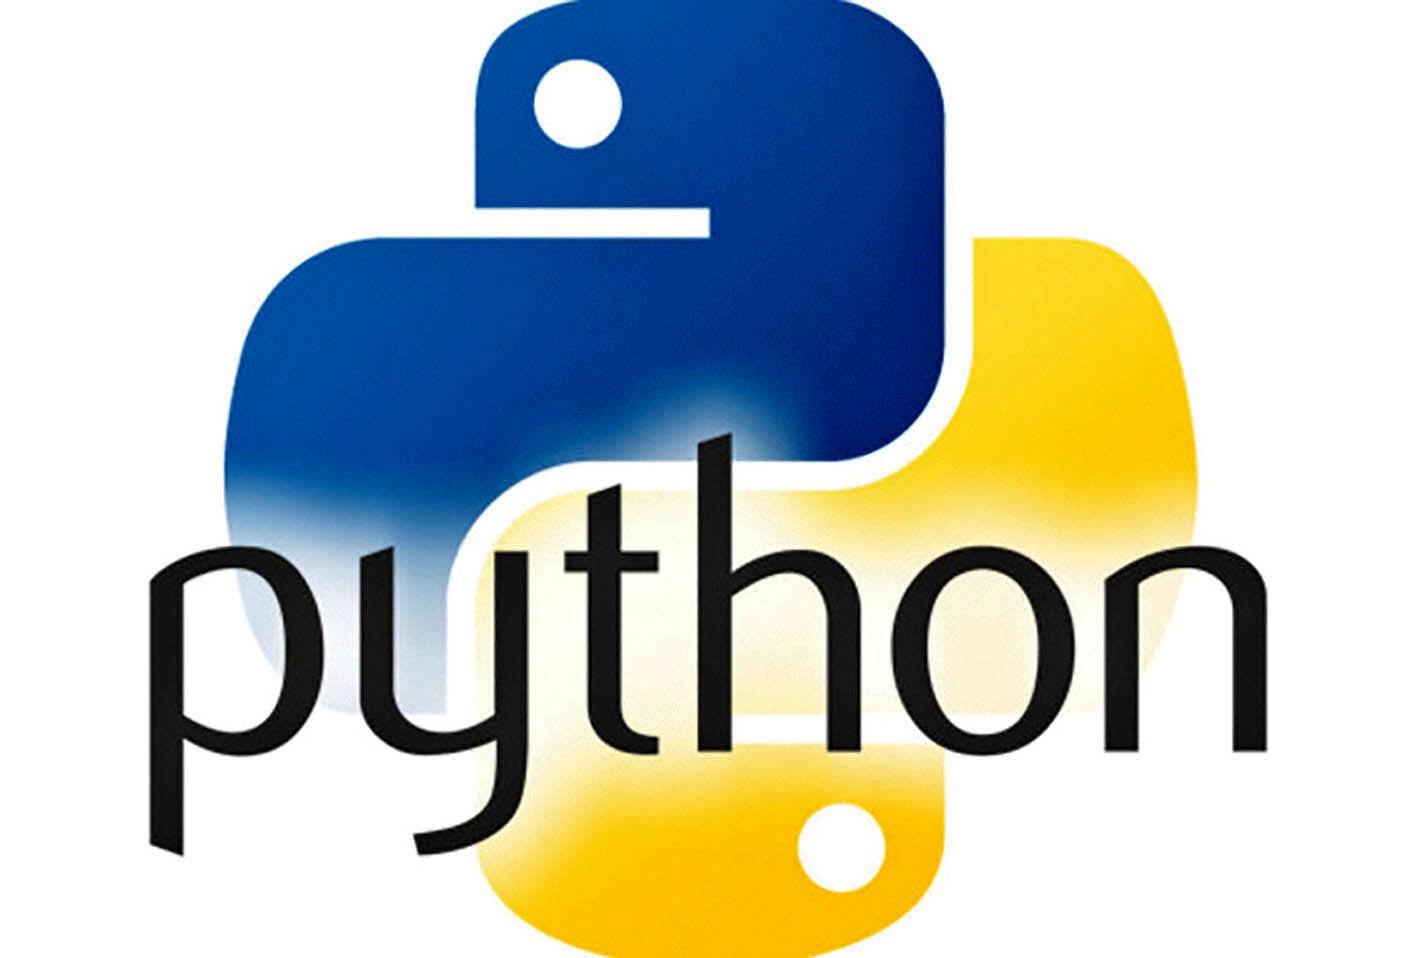 Логотип программирования питон. Язык программирования phuton логотип. Питон язык программирования. Python программирование логотип. Пион язык программирования.